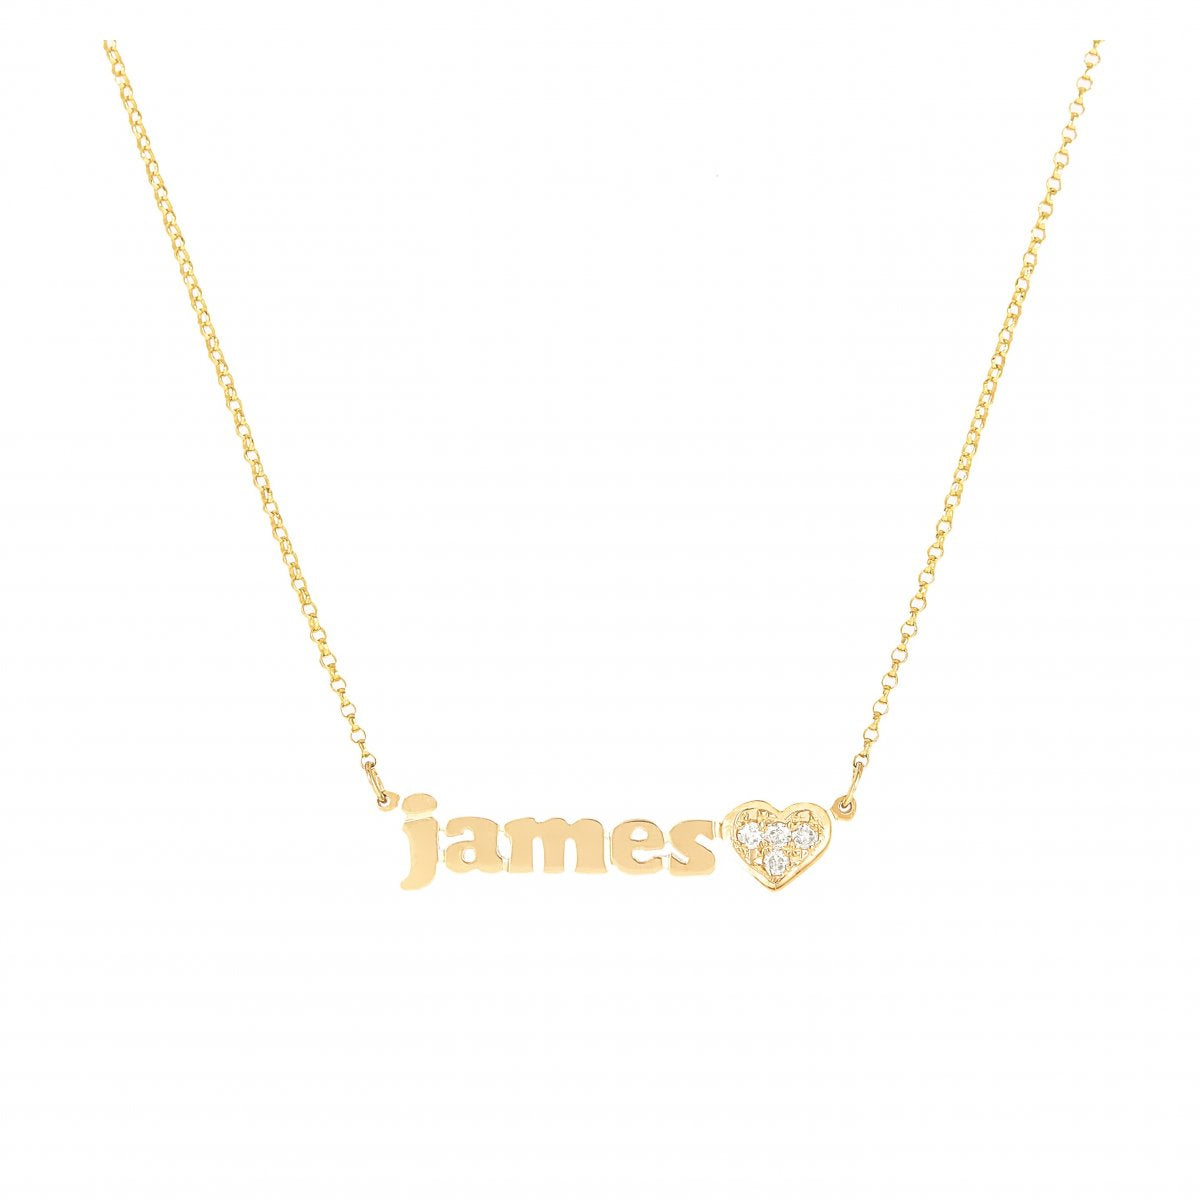 Mini Me - Diamond Heart - Personalized Necklace with Diamond Heart Accent - Lola James Jewelry 